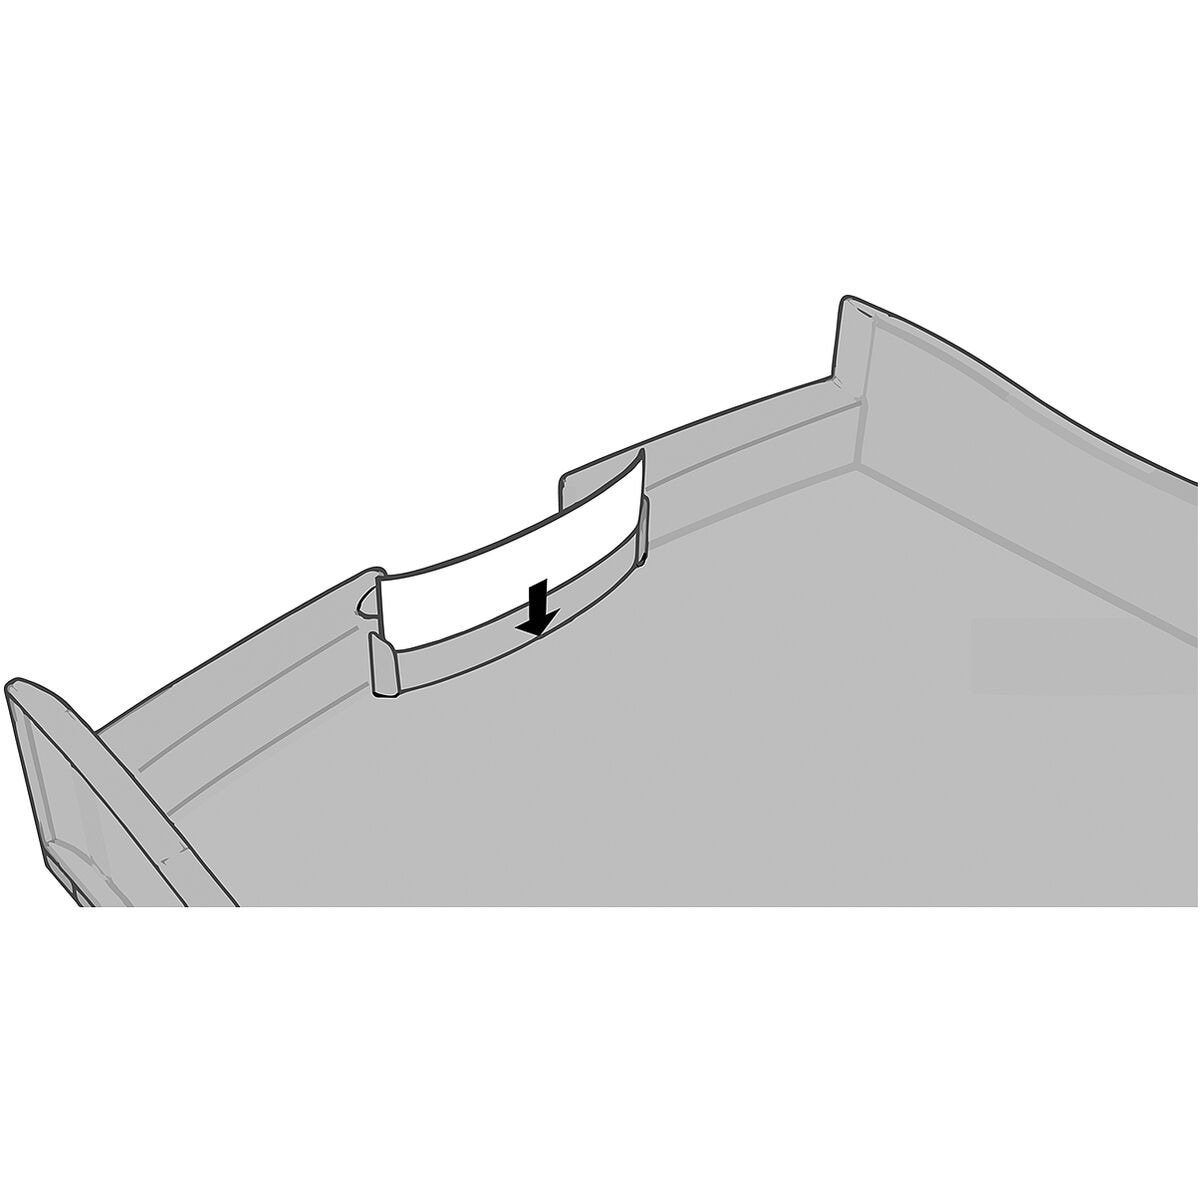 HAN Schubladenbox klar/transparent Schubladen, stapelbar Impuls, 4 offen, mit